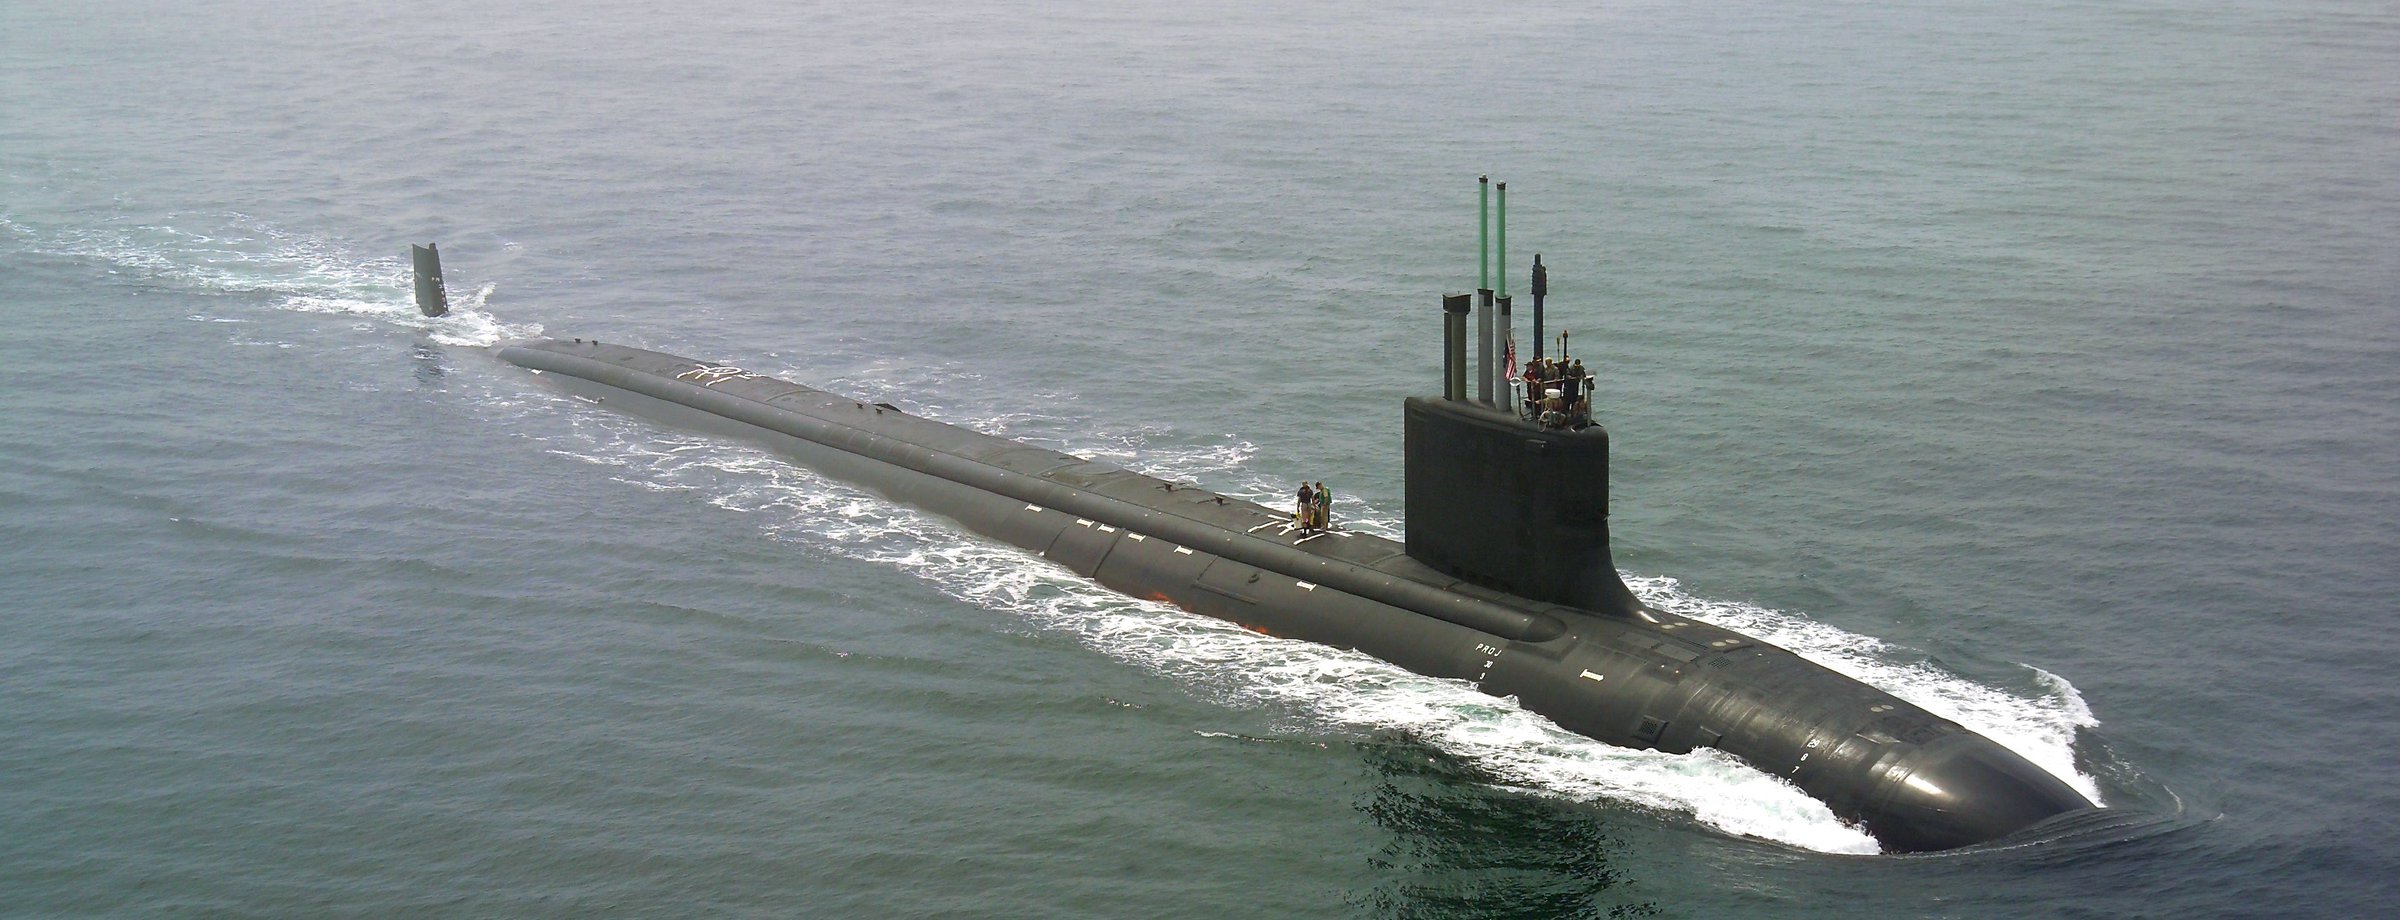 Submarine Proliferation Resource Collection | Analysis | NTI